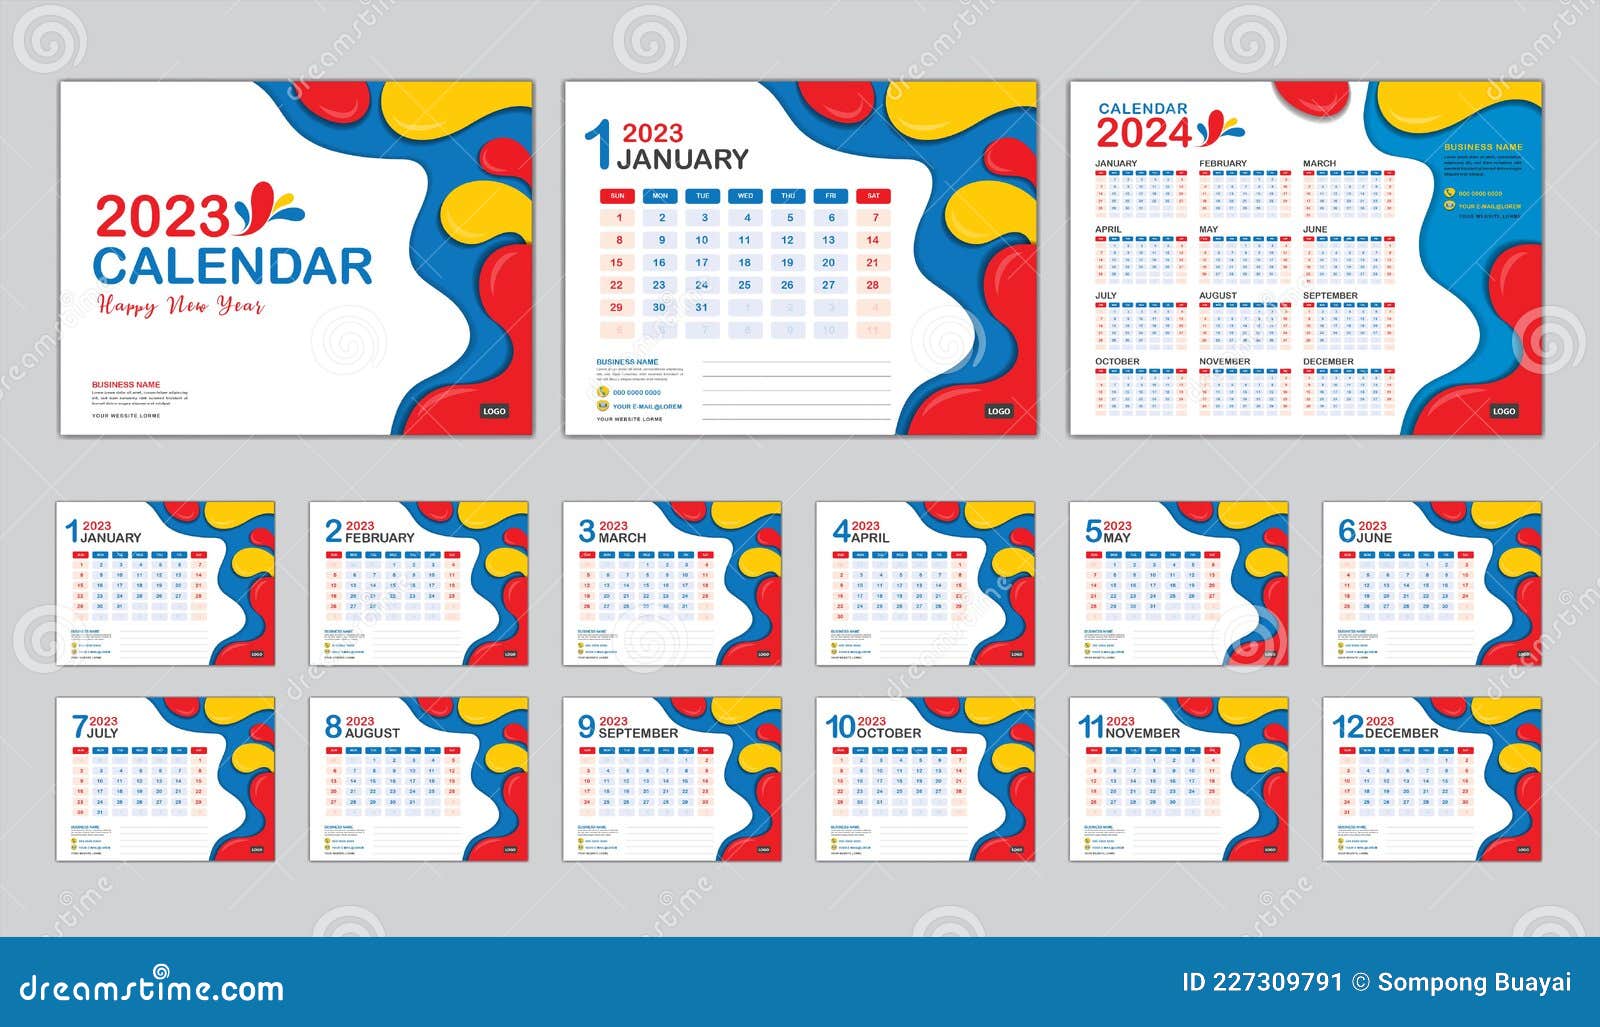 Desk Calendar 2023 Template Vector, Calendar 2024 Year, Set of 12